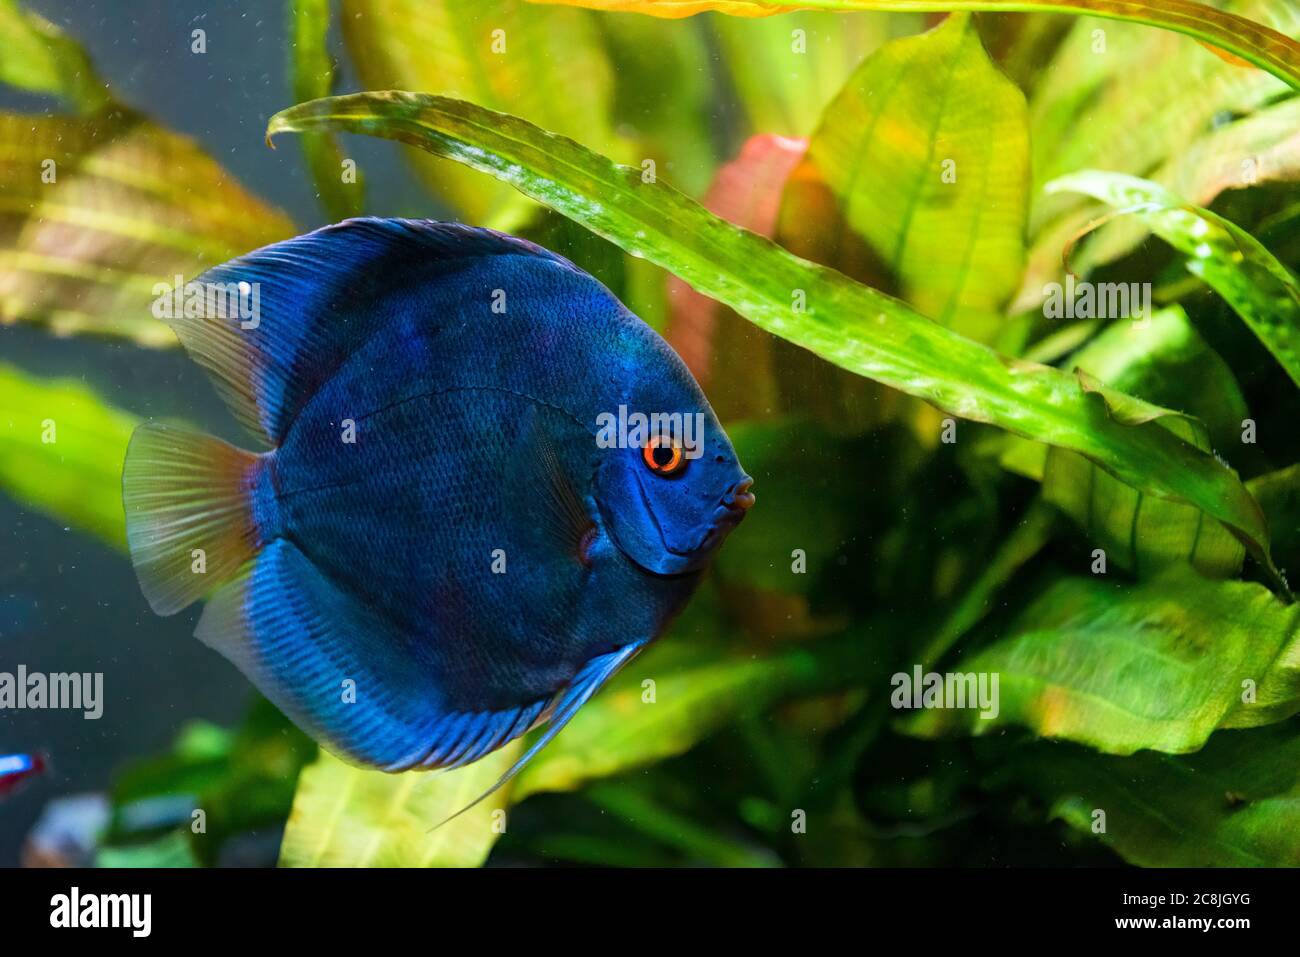 Closeup of a blue tropical Symphysodon discus fish in a fishtank. Stock Photo